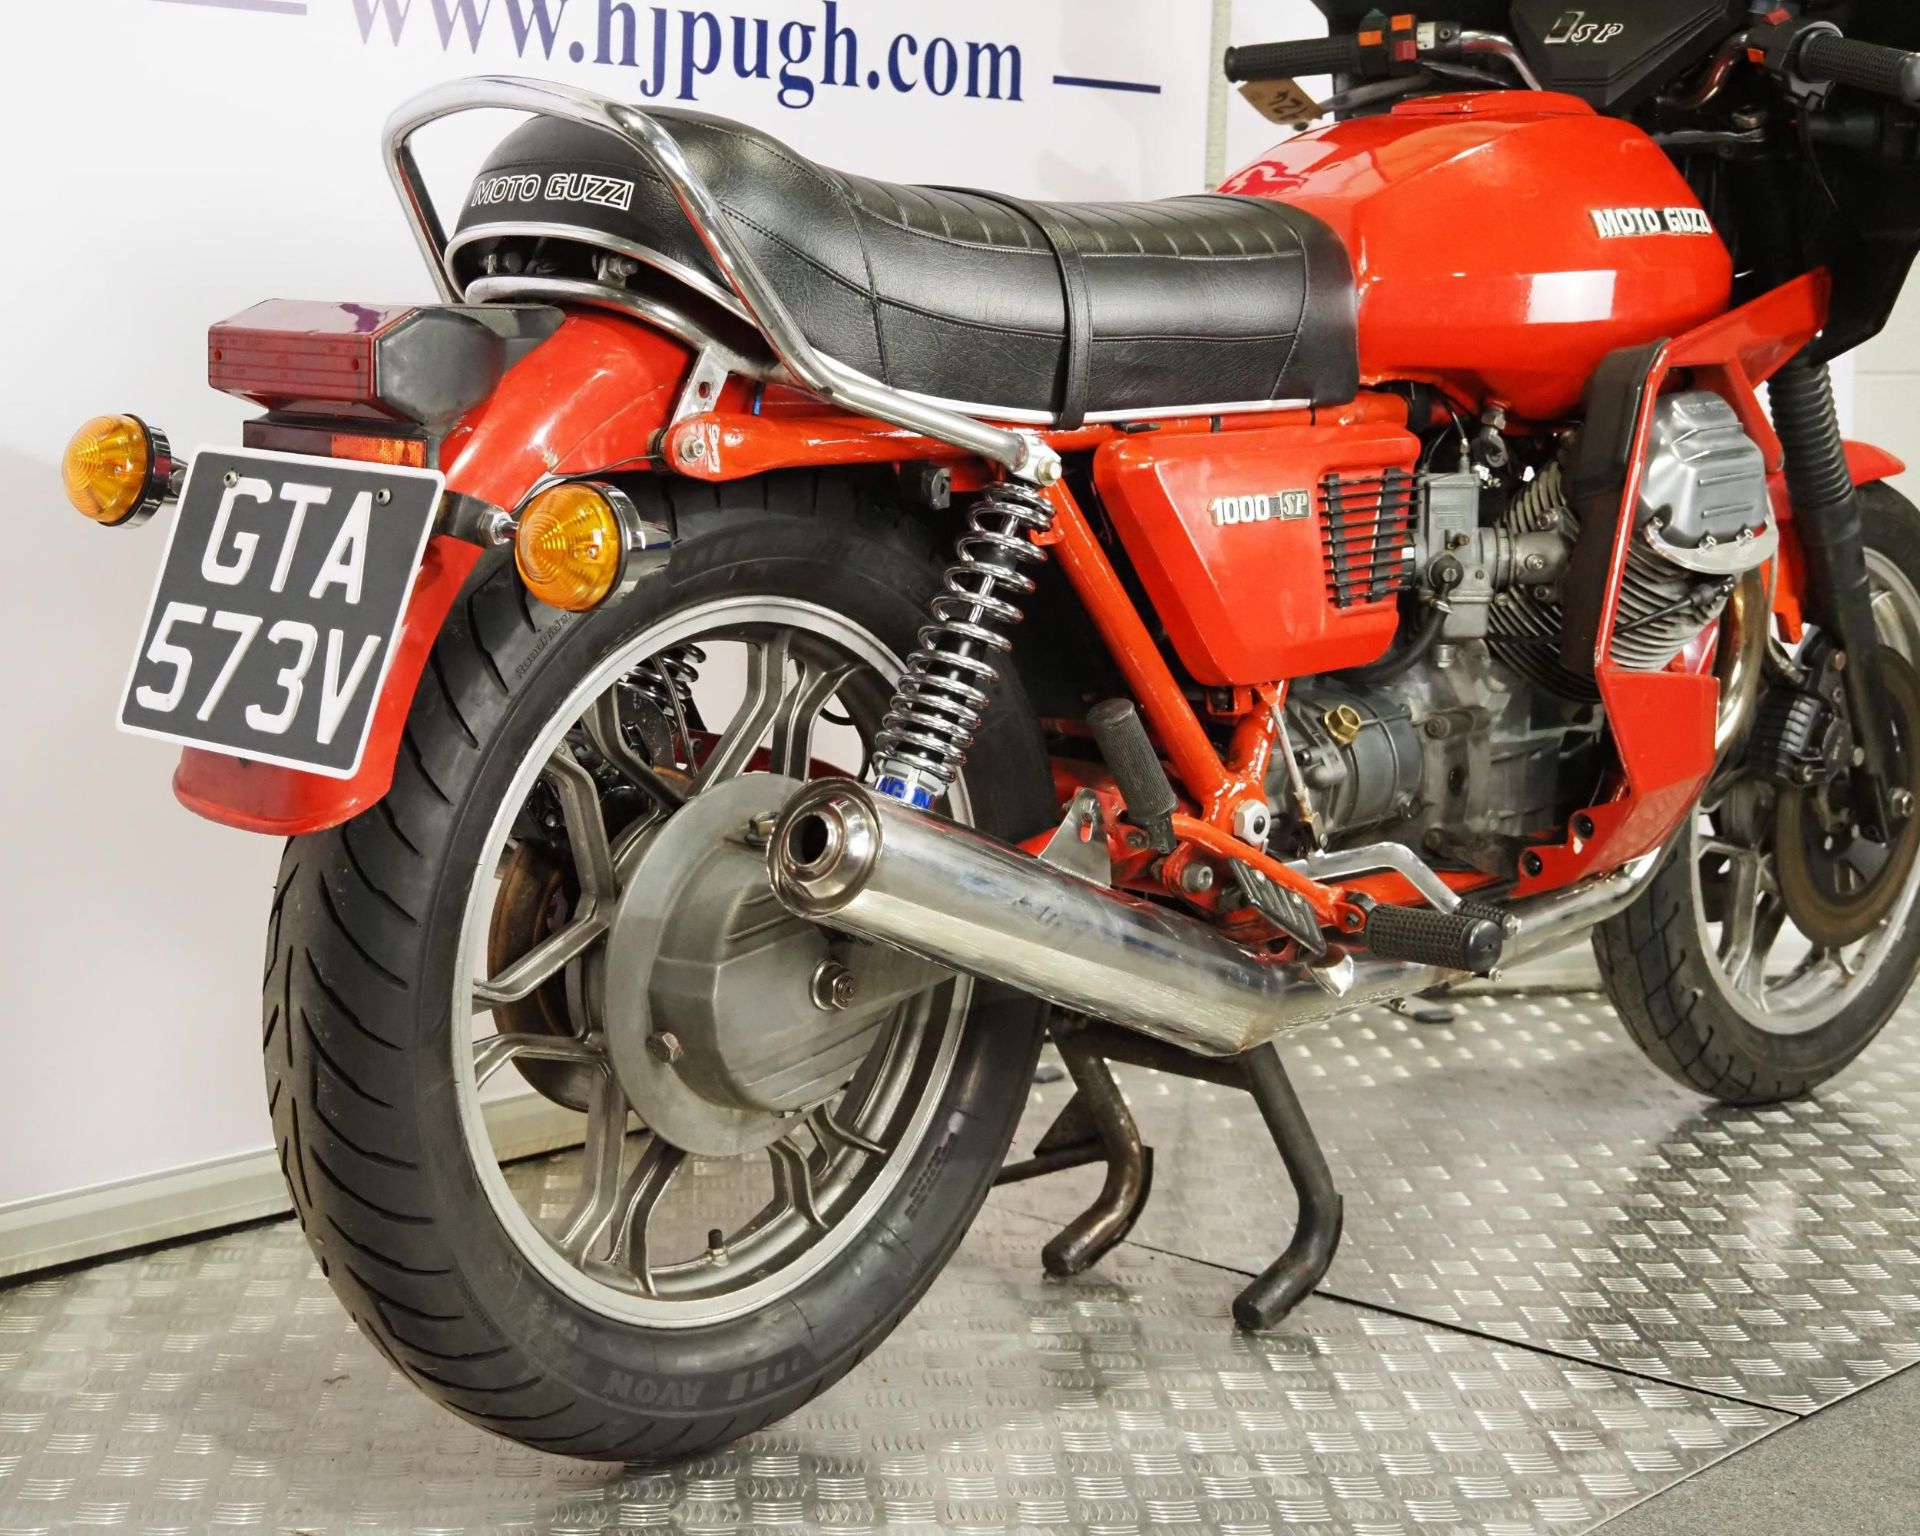 Moto Guzzi SP1000 Spada motorcycle. 1979. 948cc. Frame No. 16634 Runs and rides. Bought from Guzzi - Image 3 of 6